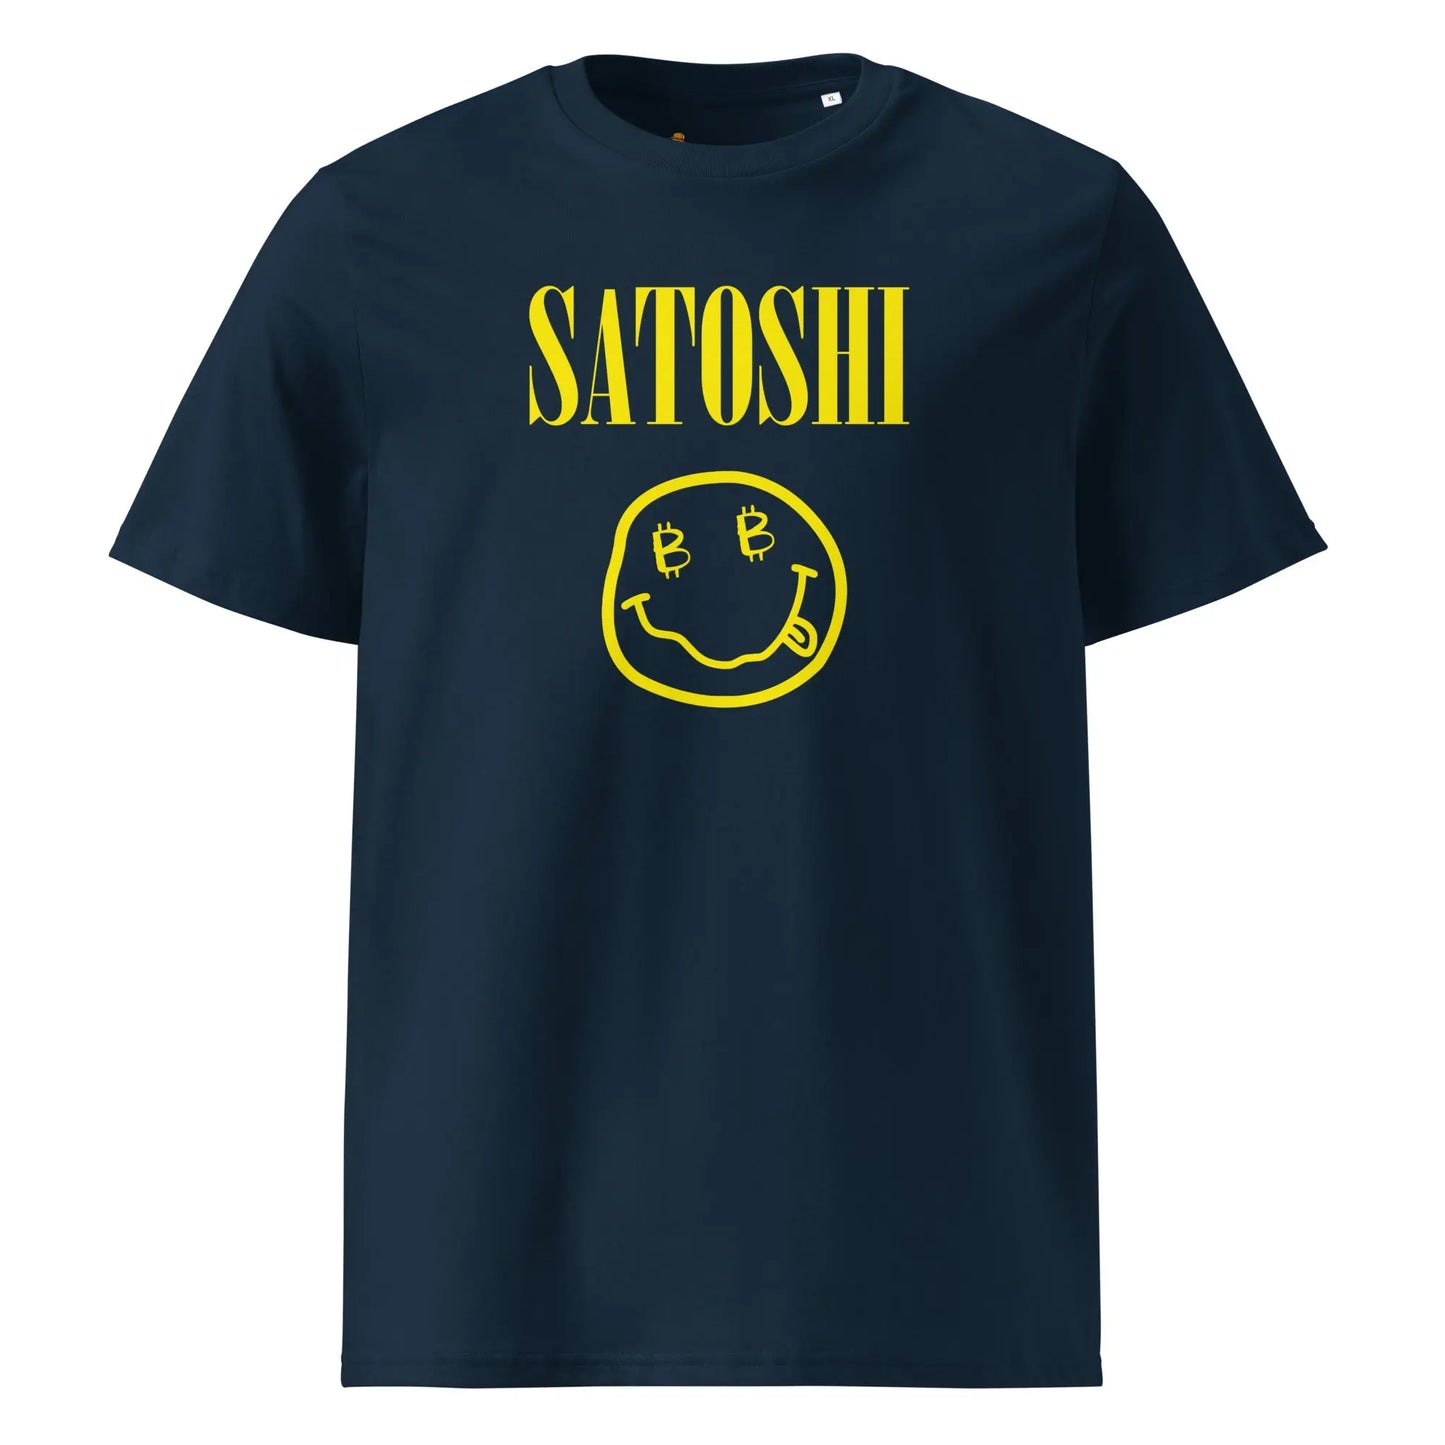 Satoshi - Jack Dorsey Edition - Premium Unisex Organic Cotton Bitcoin T-shirt Store of Value